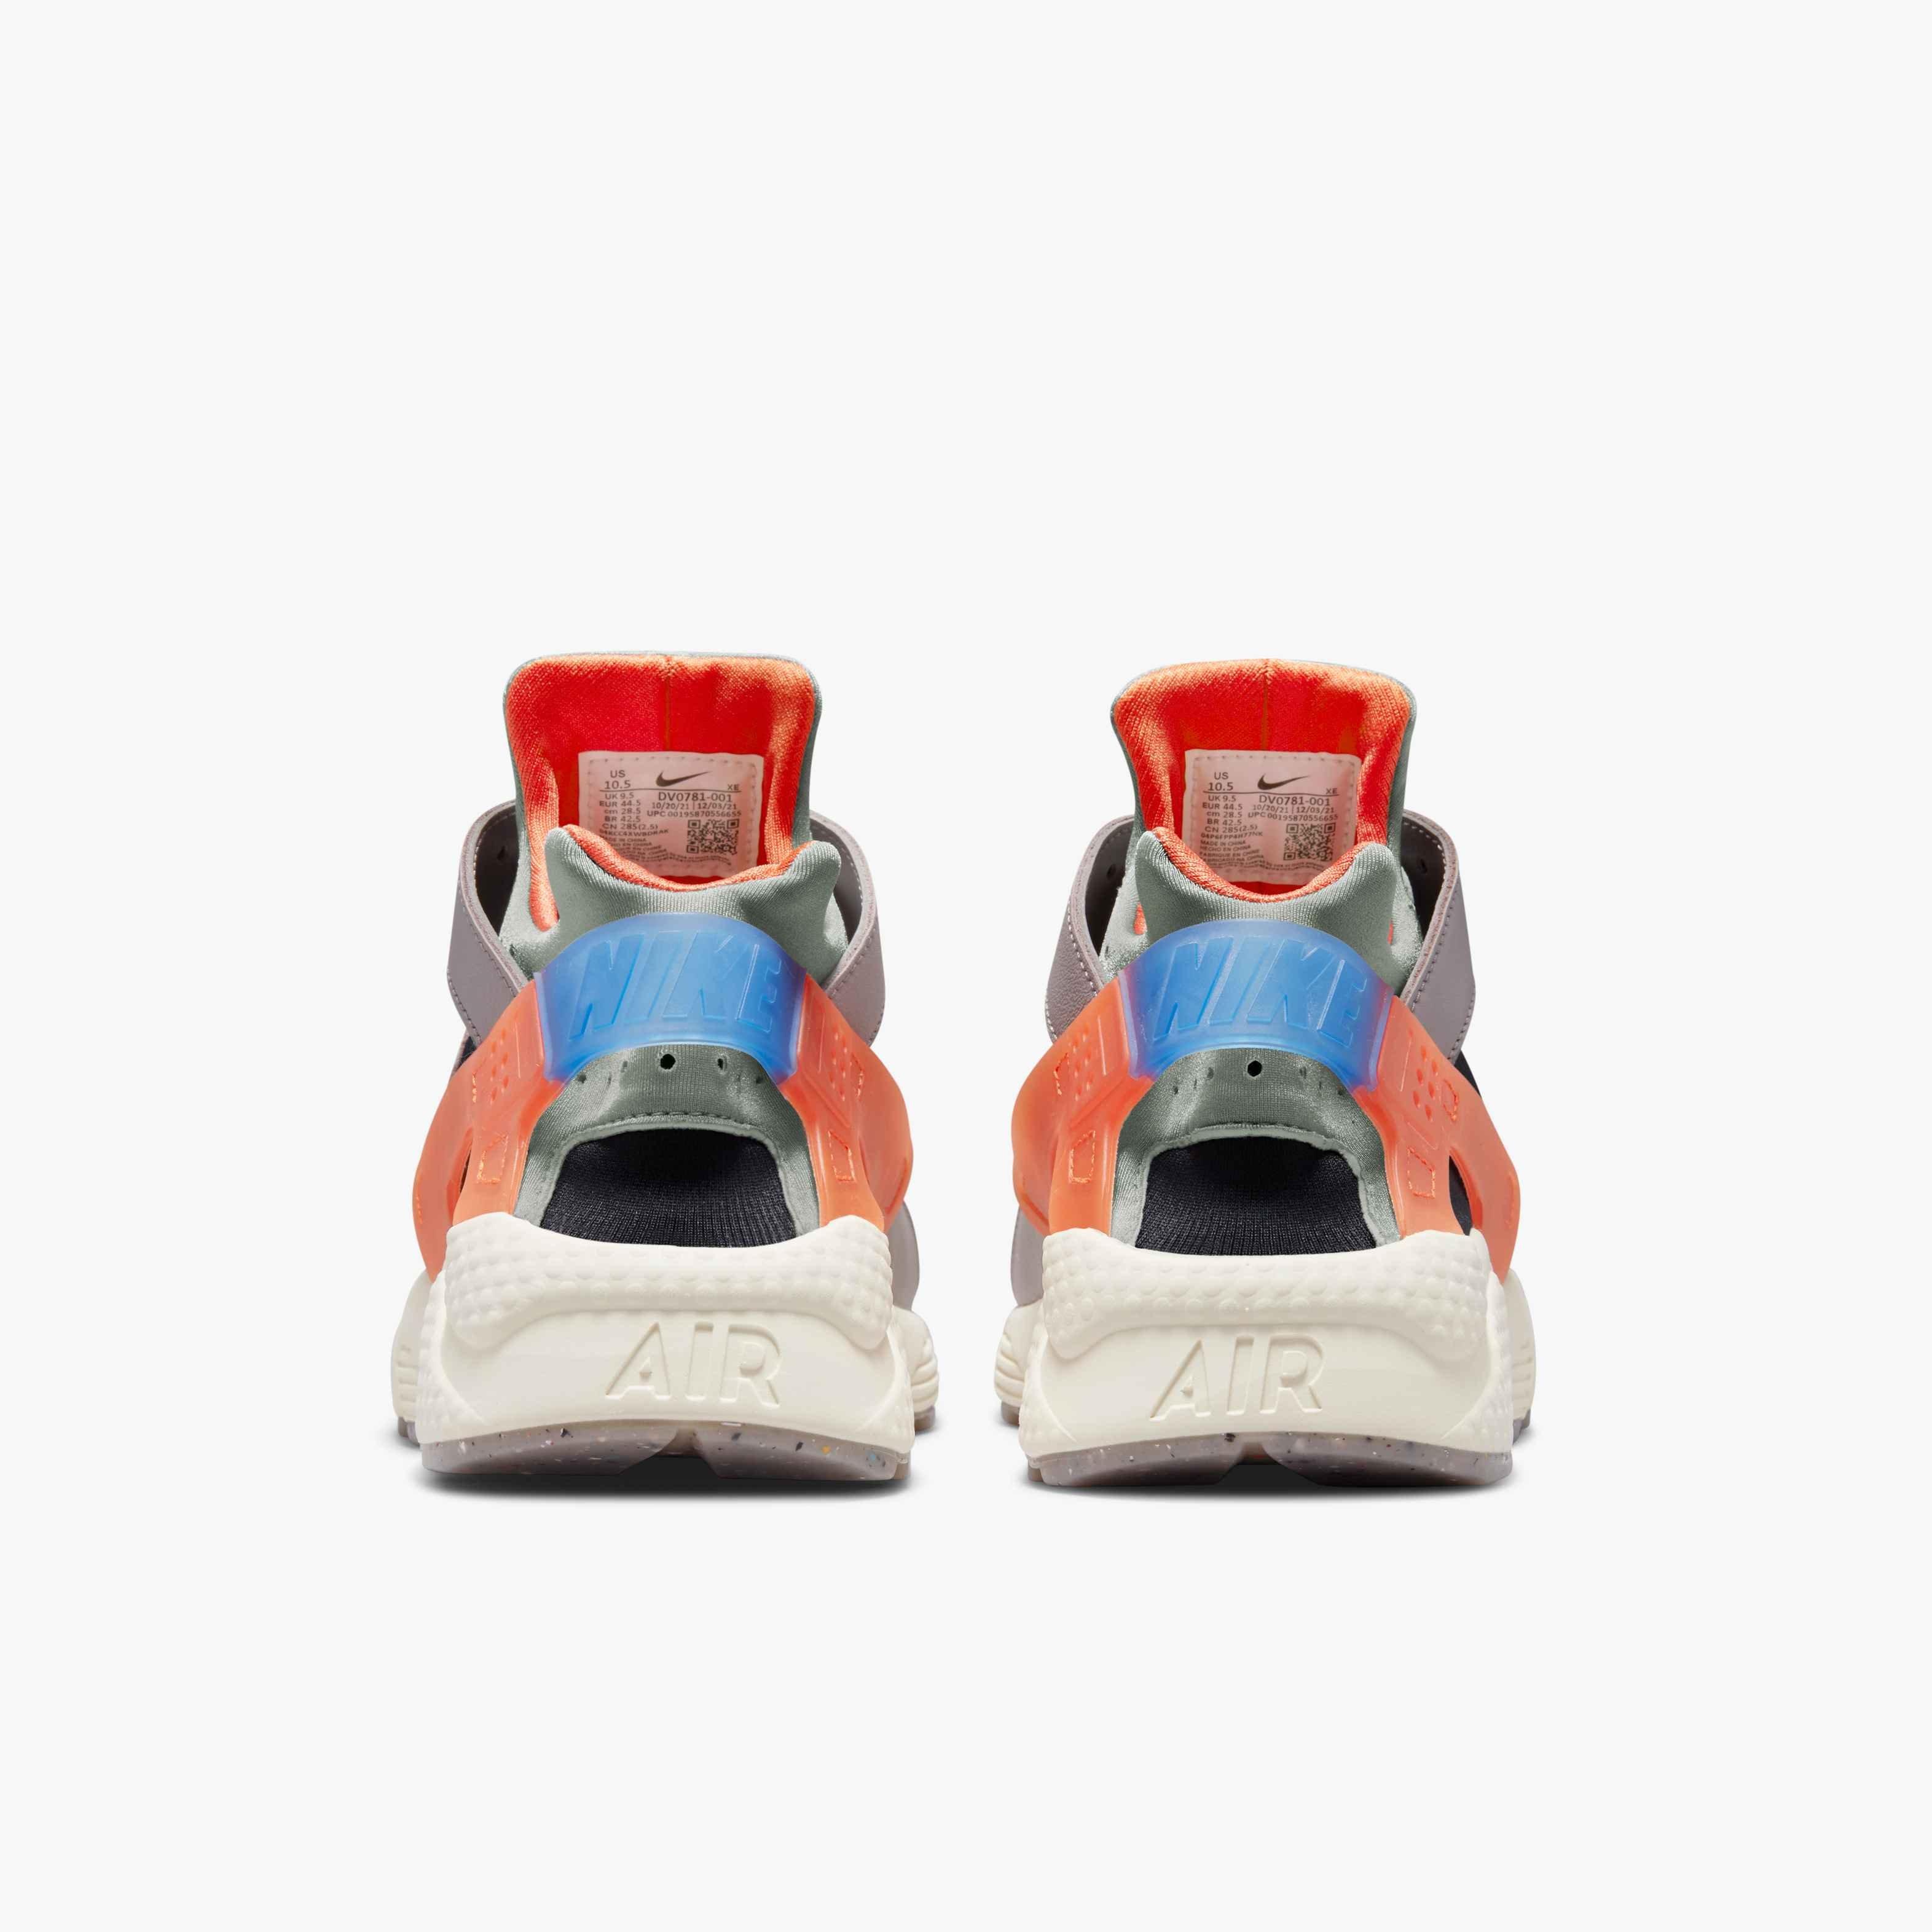 Nike Air Huarache Premium "City Men's Shoe